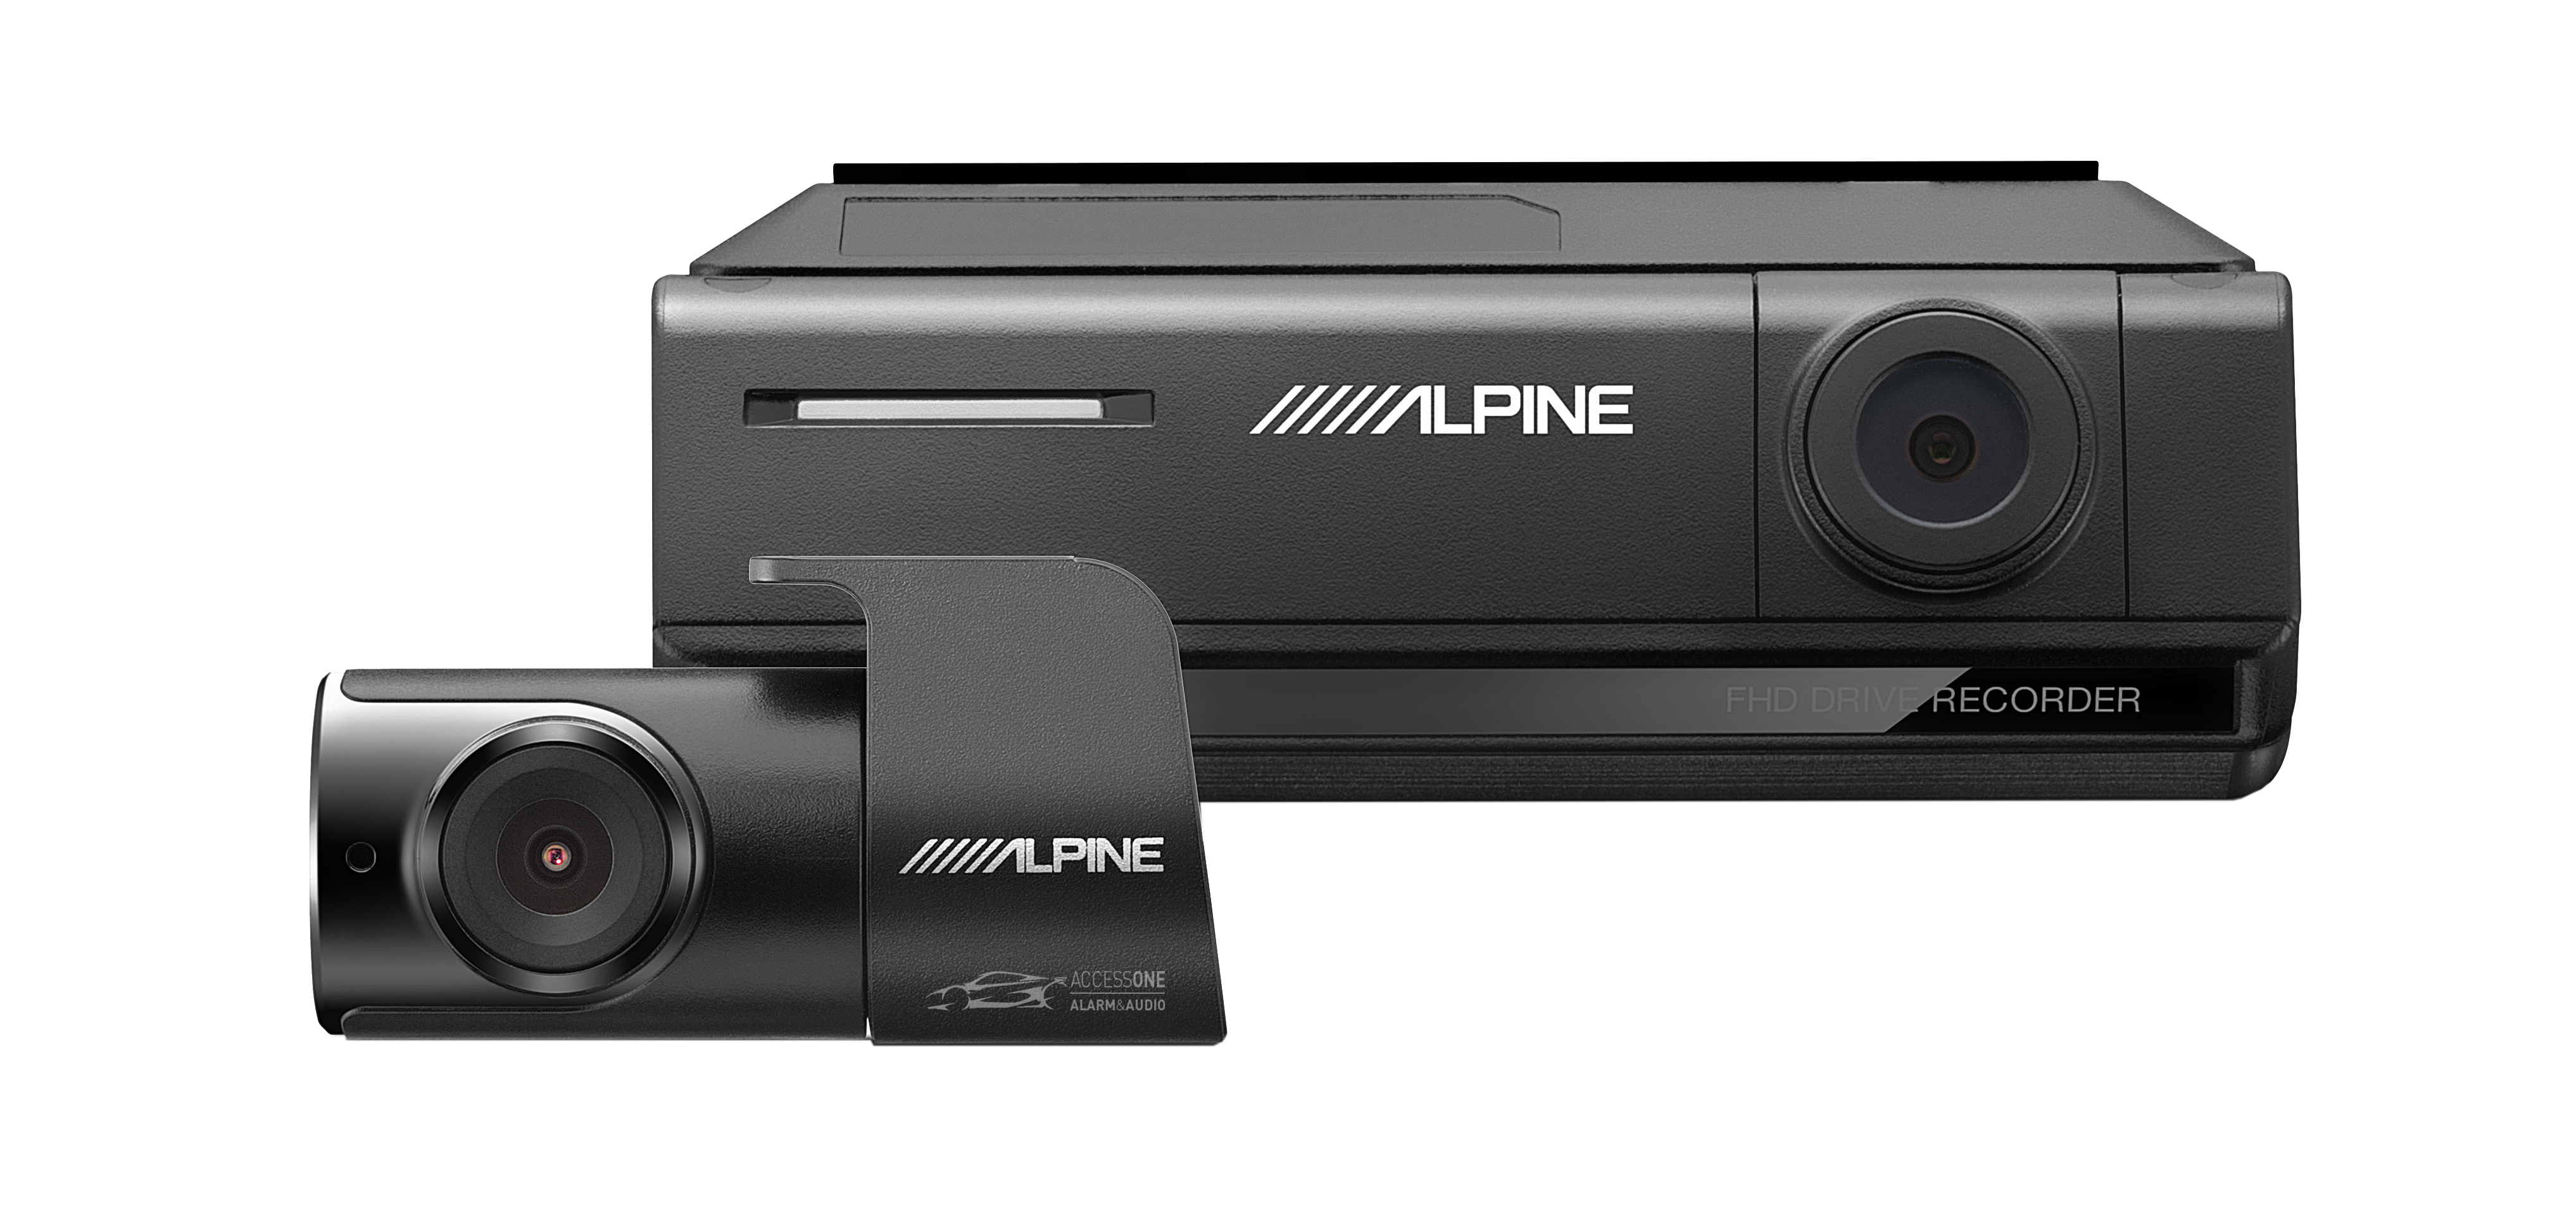 Alpine DVR-C320R